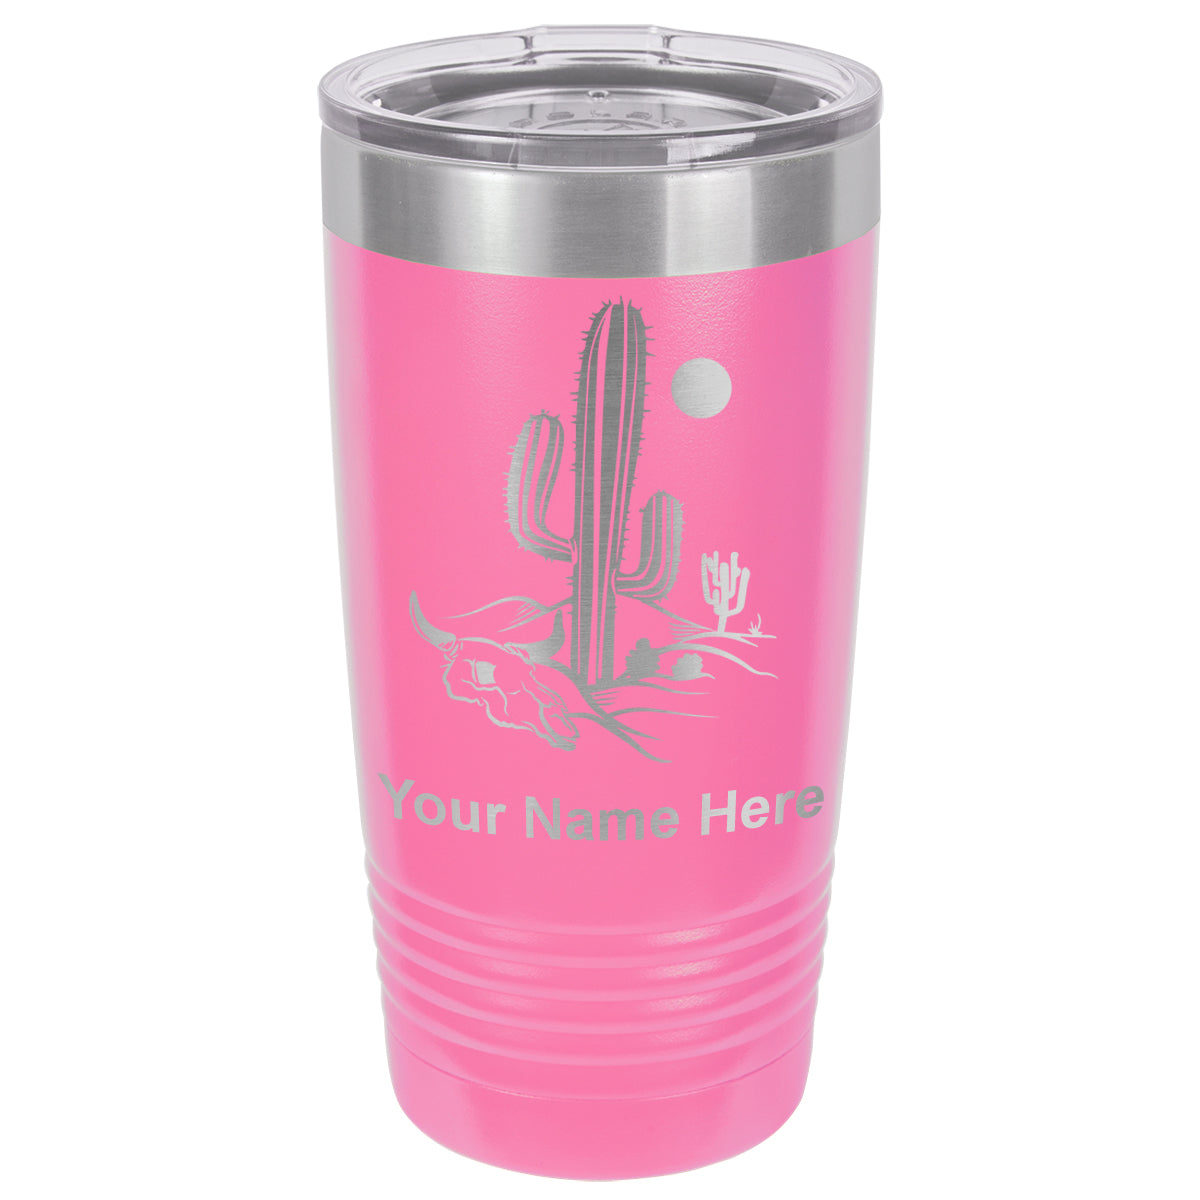 20oz Vacuum Insulated Tumbler Mug, Cactus, Personalized Engraving Included